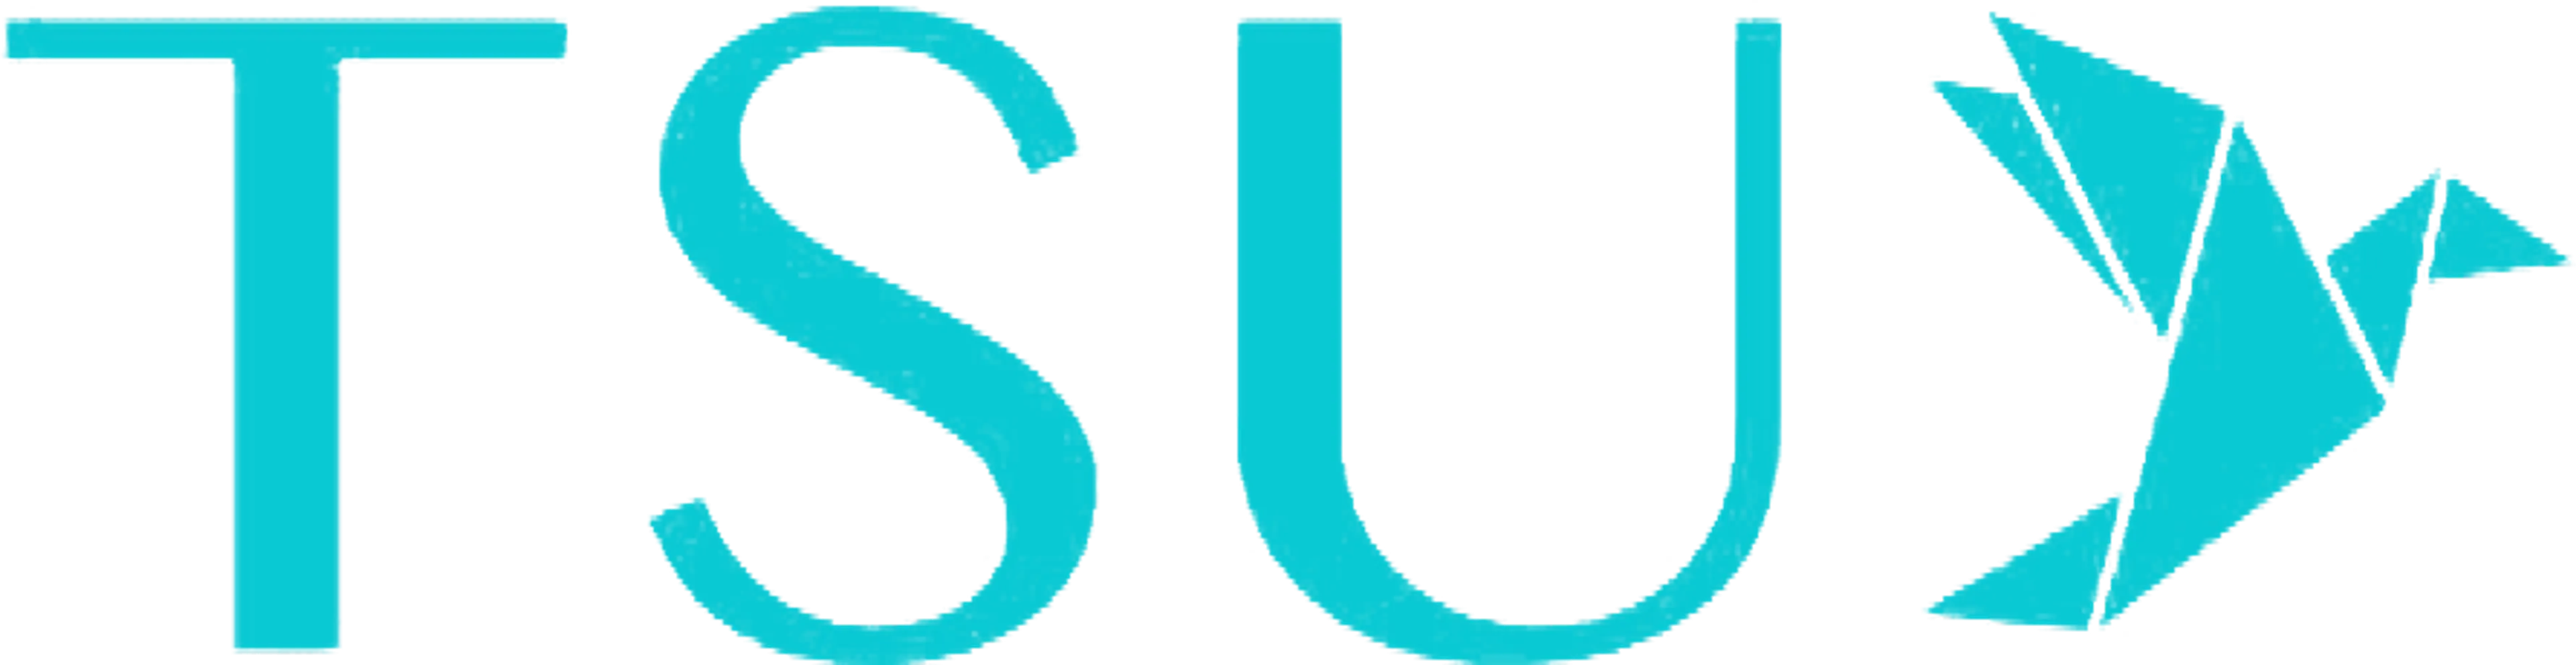 TSU COSMÉTICOS logo